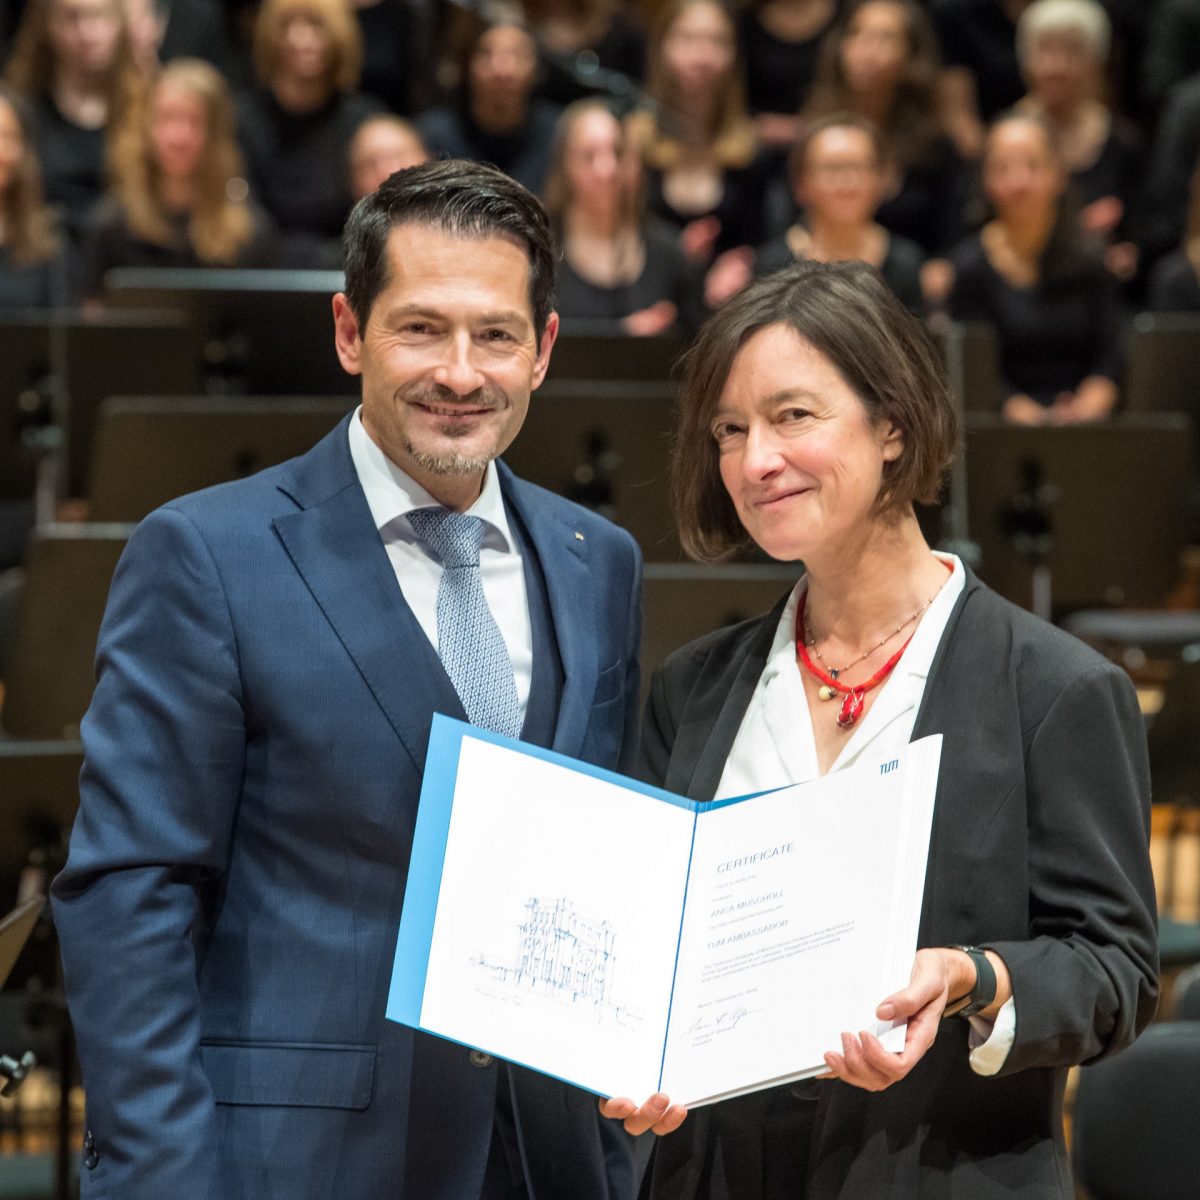 TUM President Thomas F. Hofmann presents Anca Muscholl with the Ambassador Certificate.